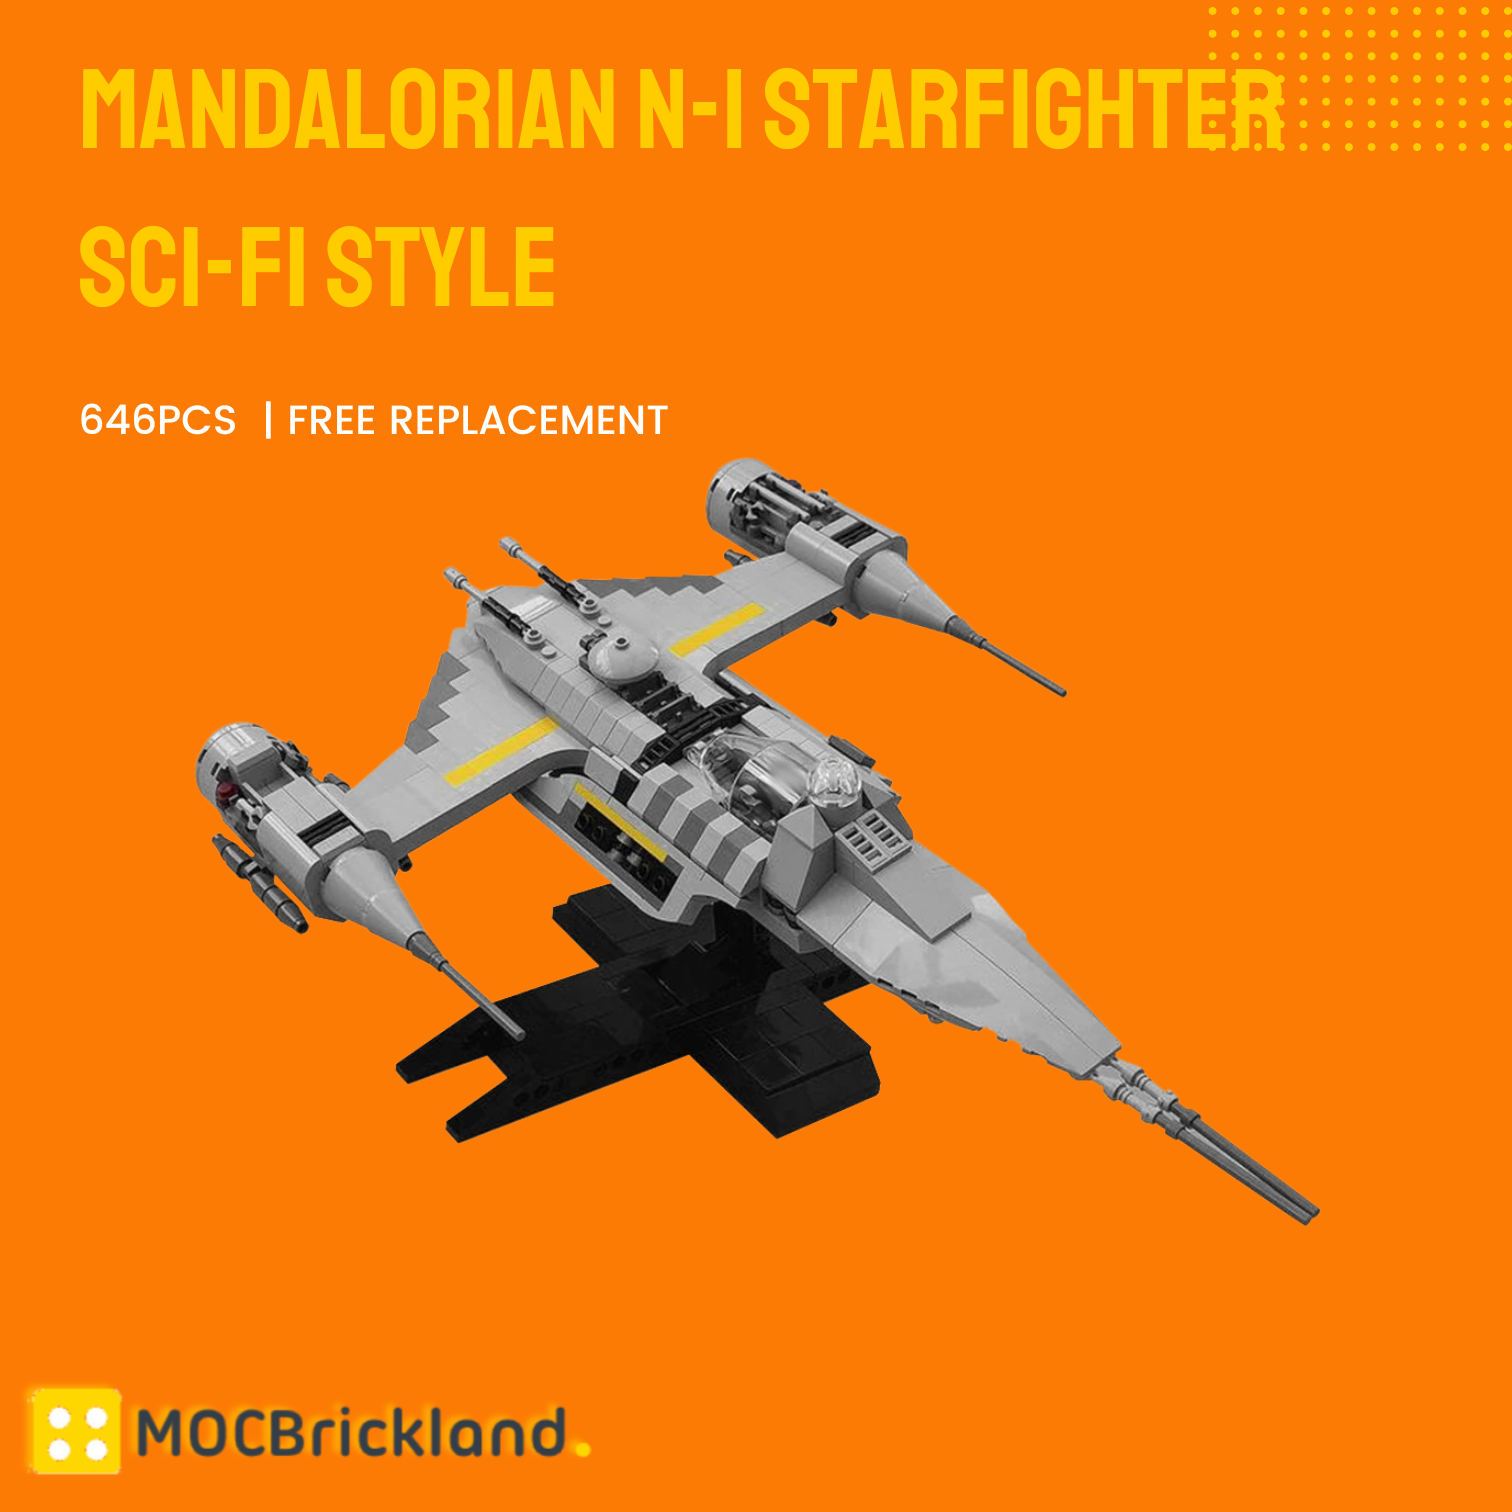 Mandalorian N-1 Starfighter Sci-fi Style MOC-100717 Star Wars With 646PCS 